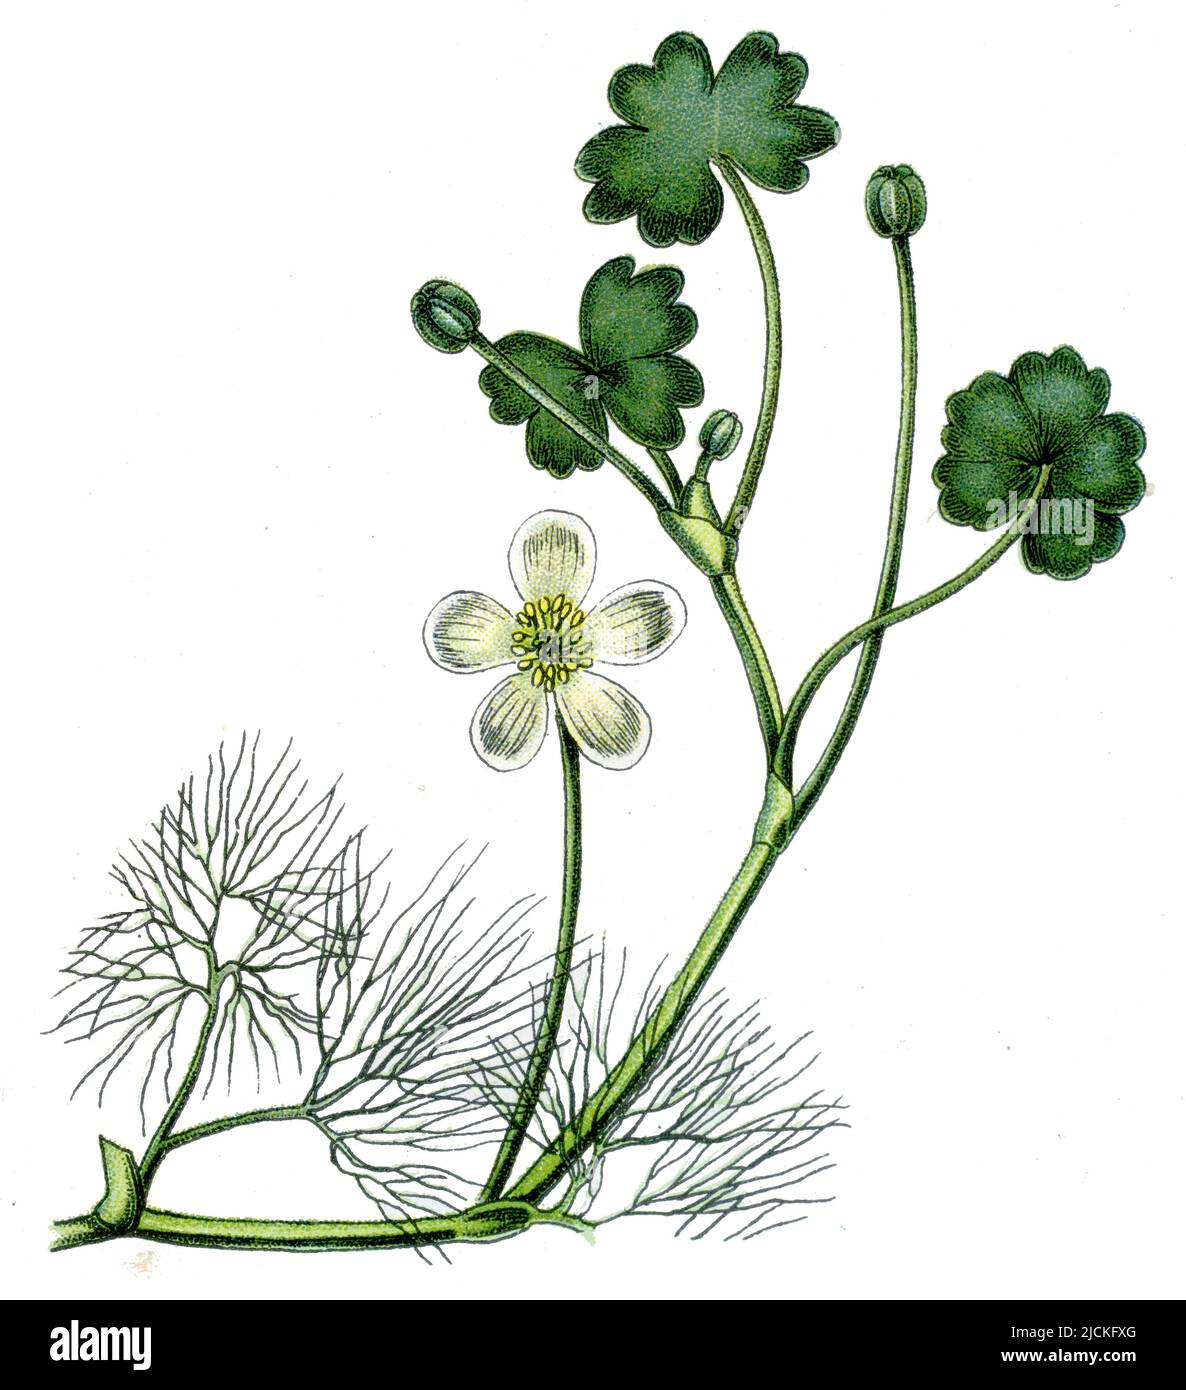 fiume acqua-crowfoot Ranunculus fluitans, (botanica libro, 1909), Flutender Wasserhahnenfuß Foto Stock